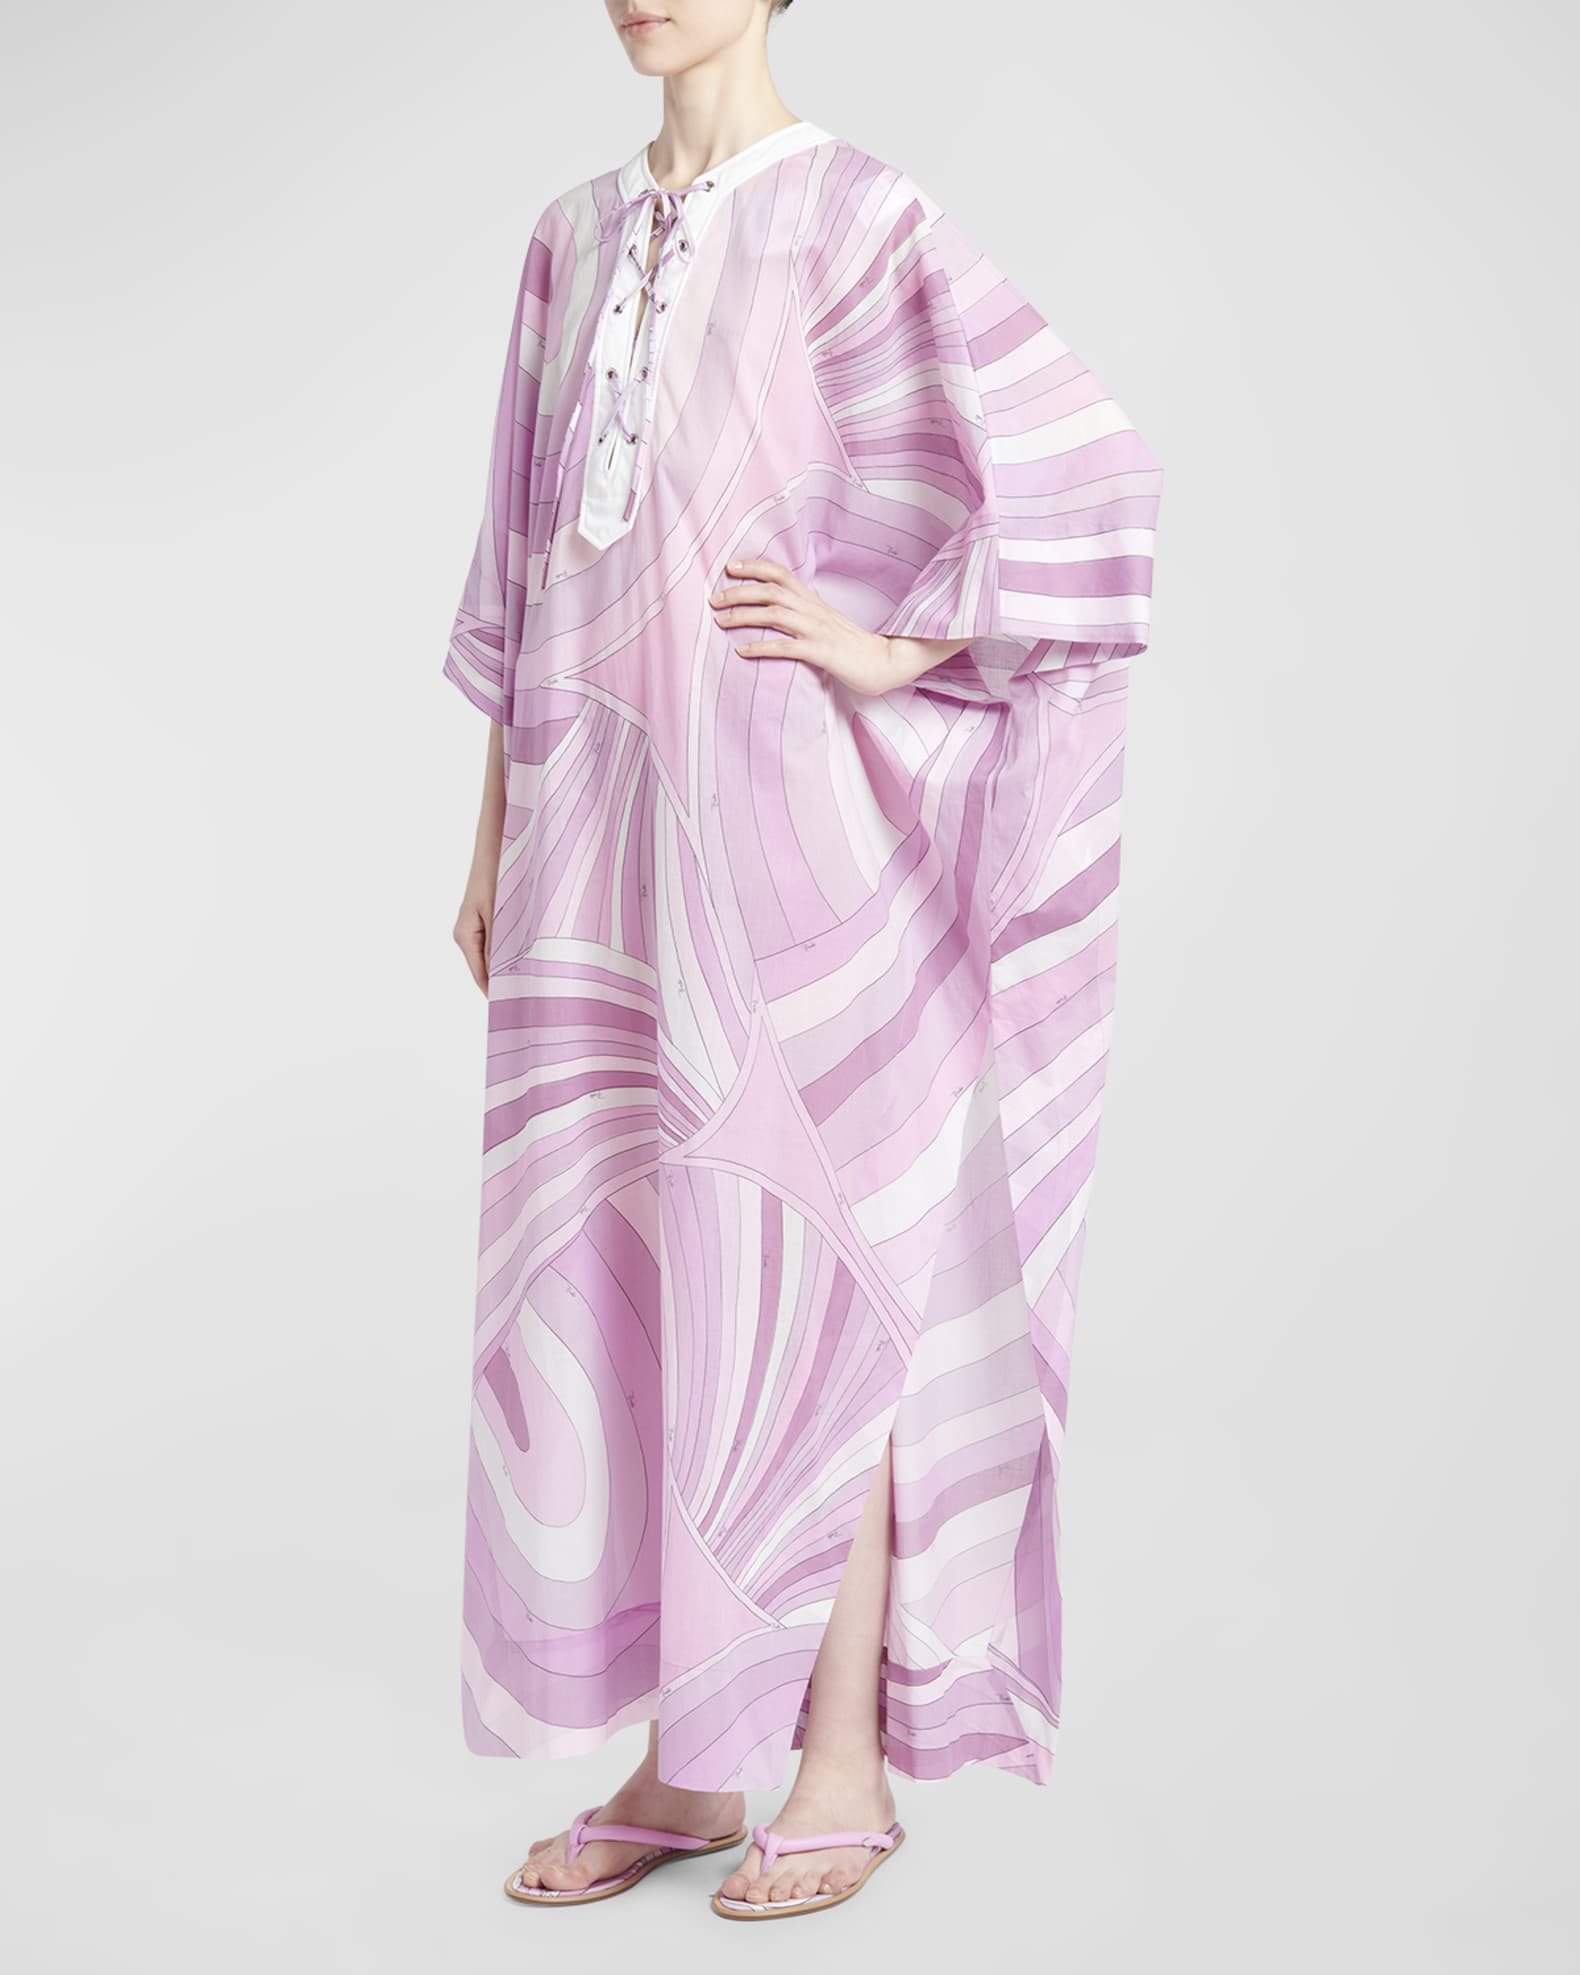 Emilio Pucci kaftan dress with graphic print